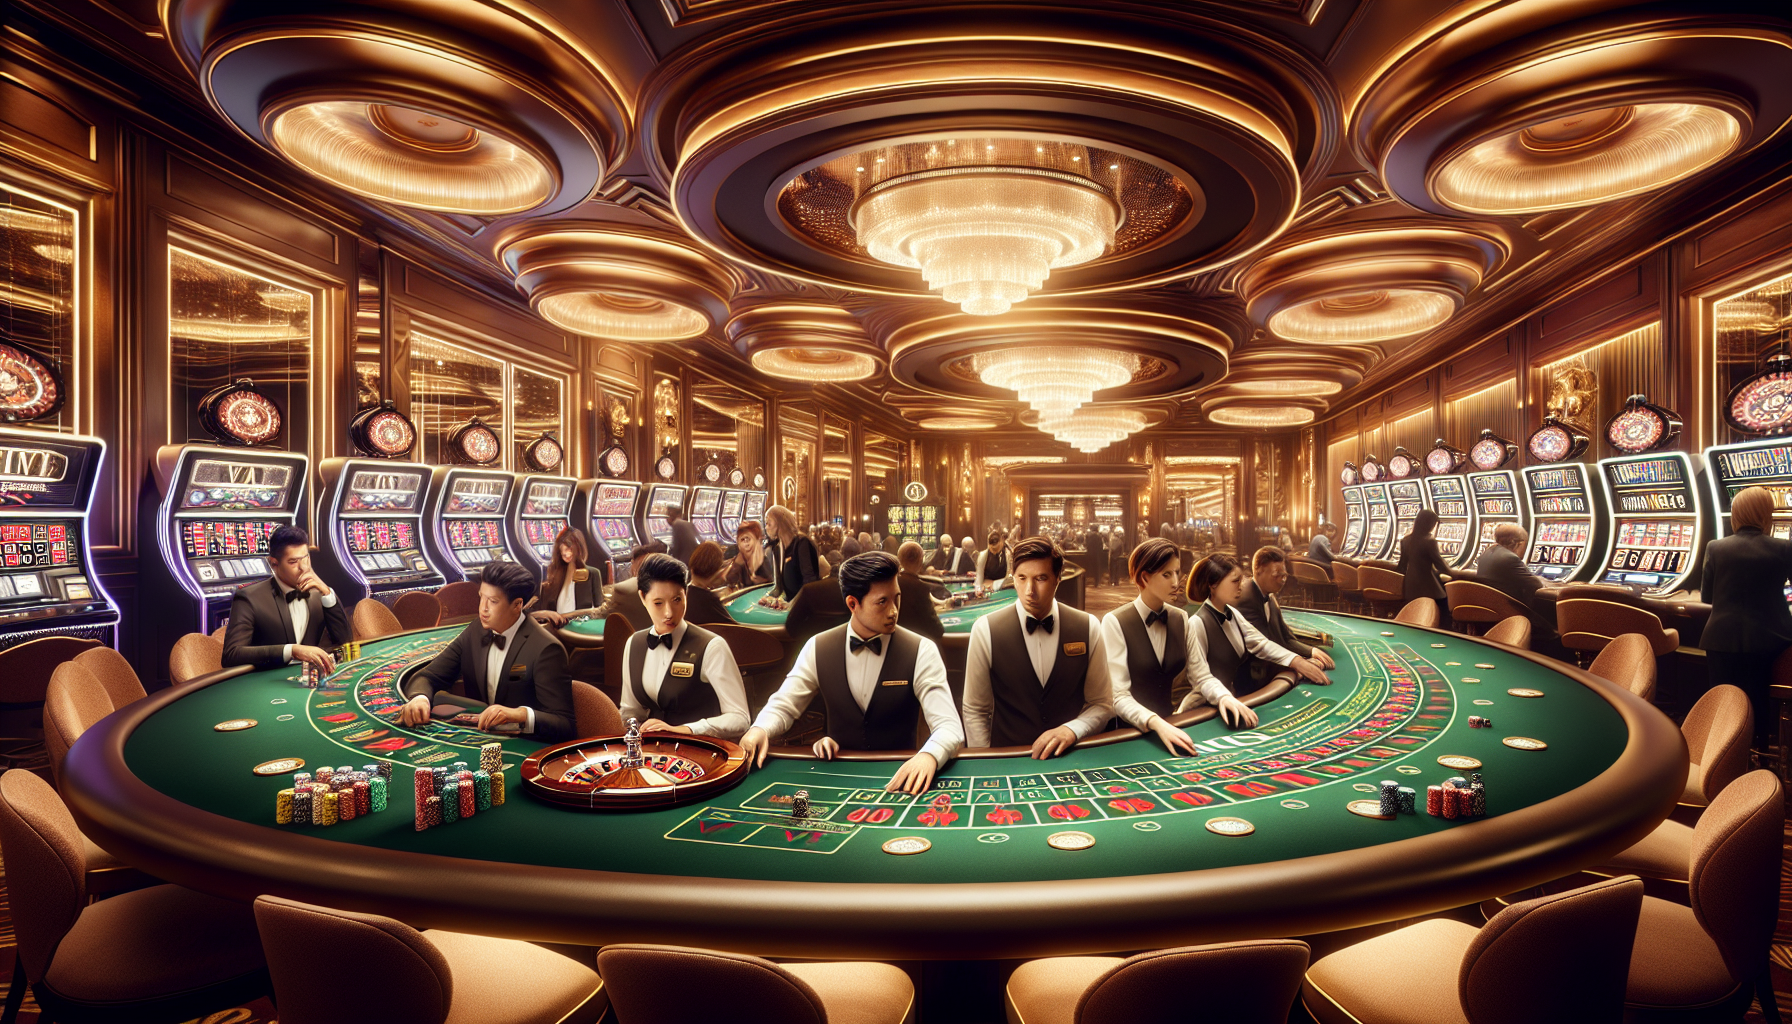 High-quality VIP casino games